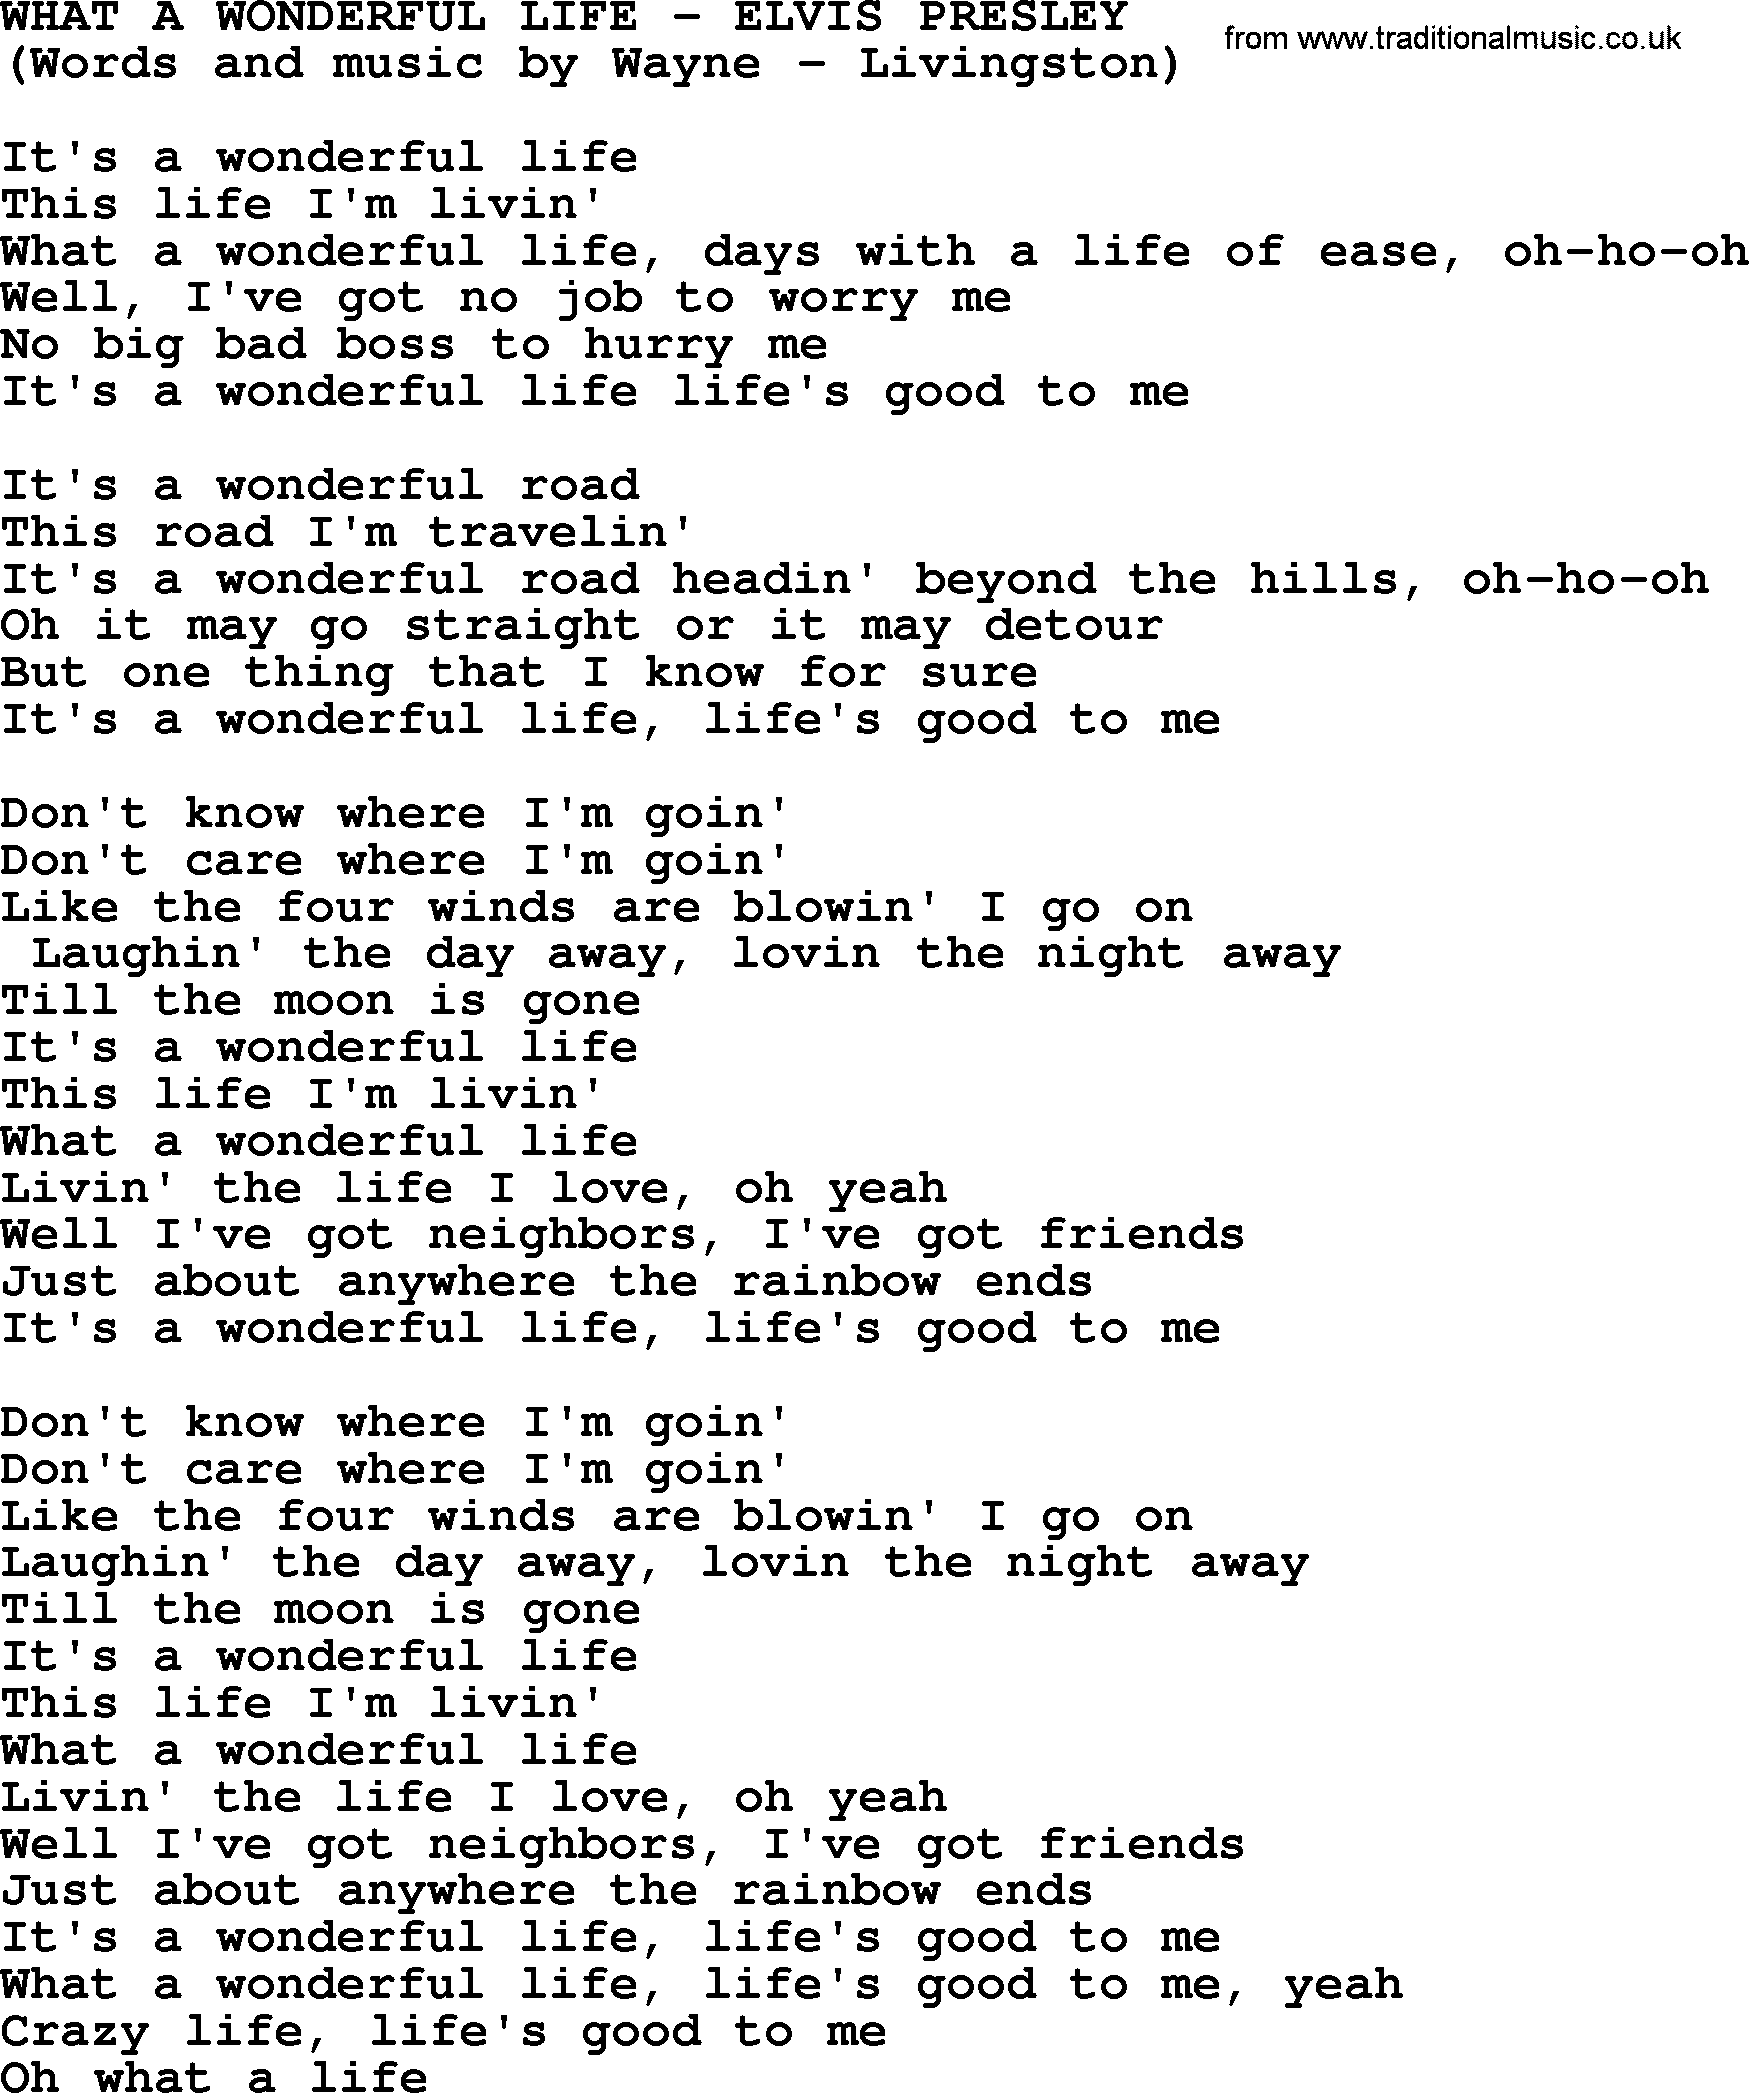 What A Wonderful Life by Elvis Presley - lyrics